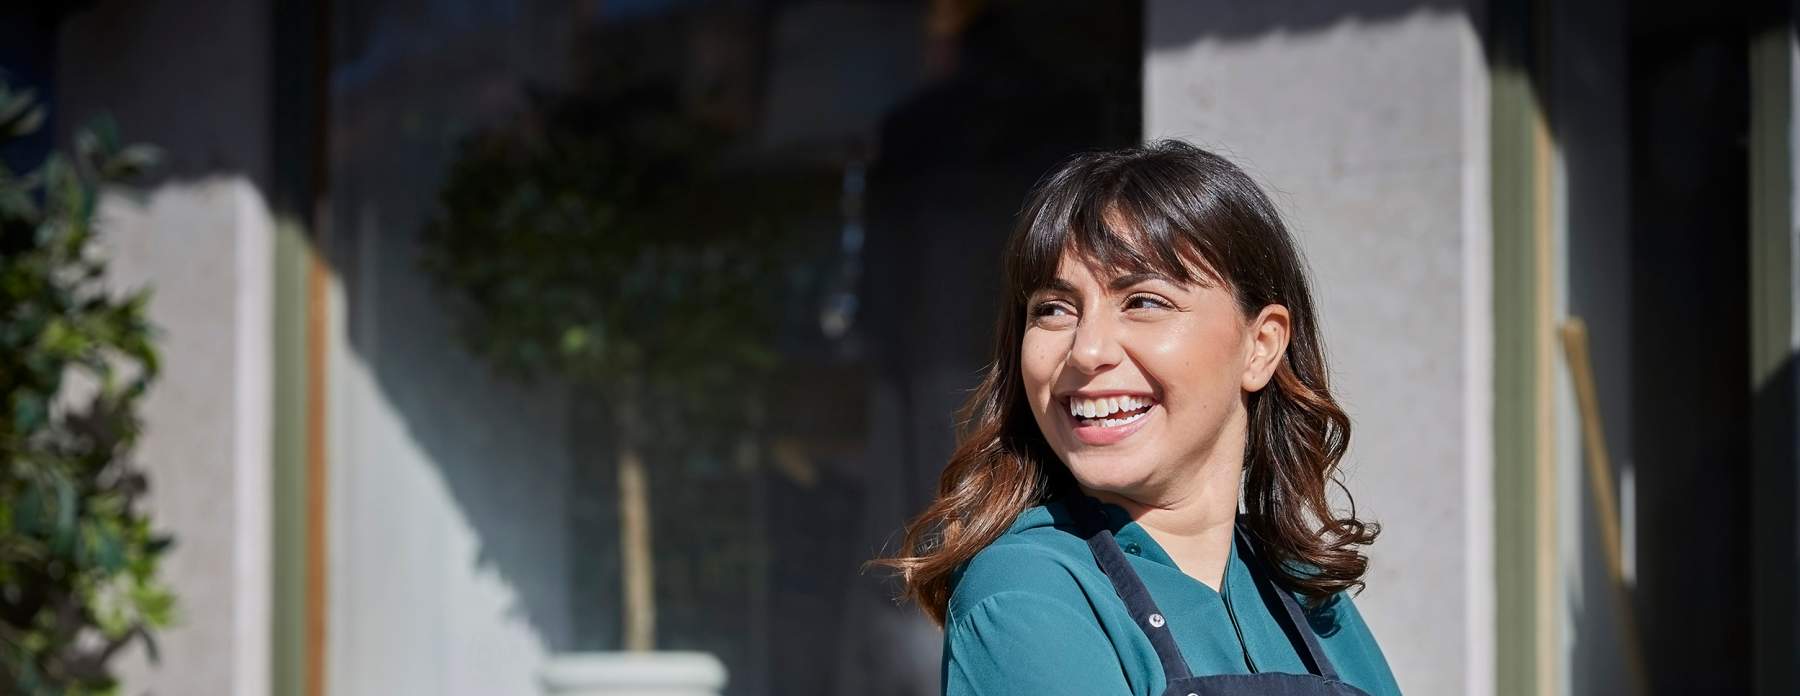 Laughing woman wearing an apron outside a café